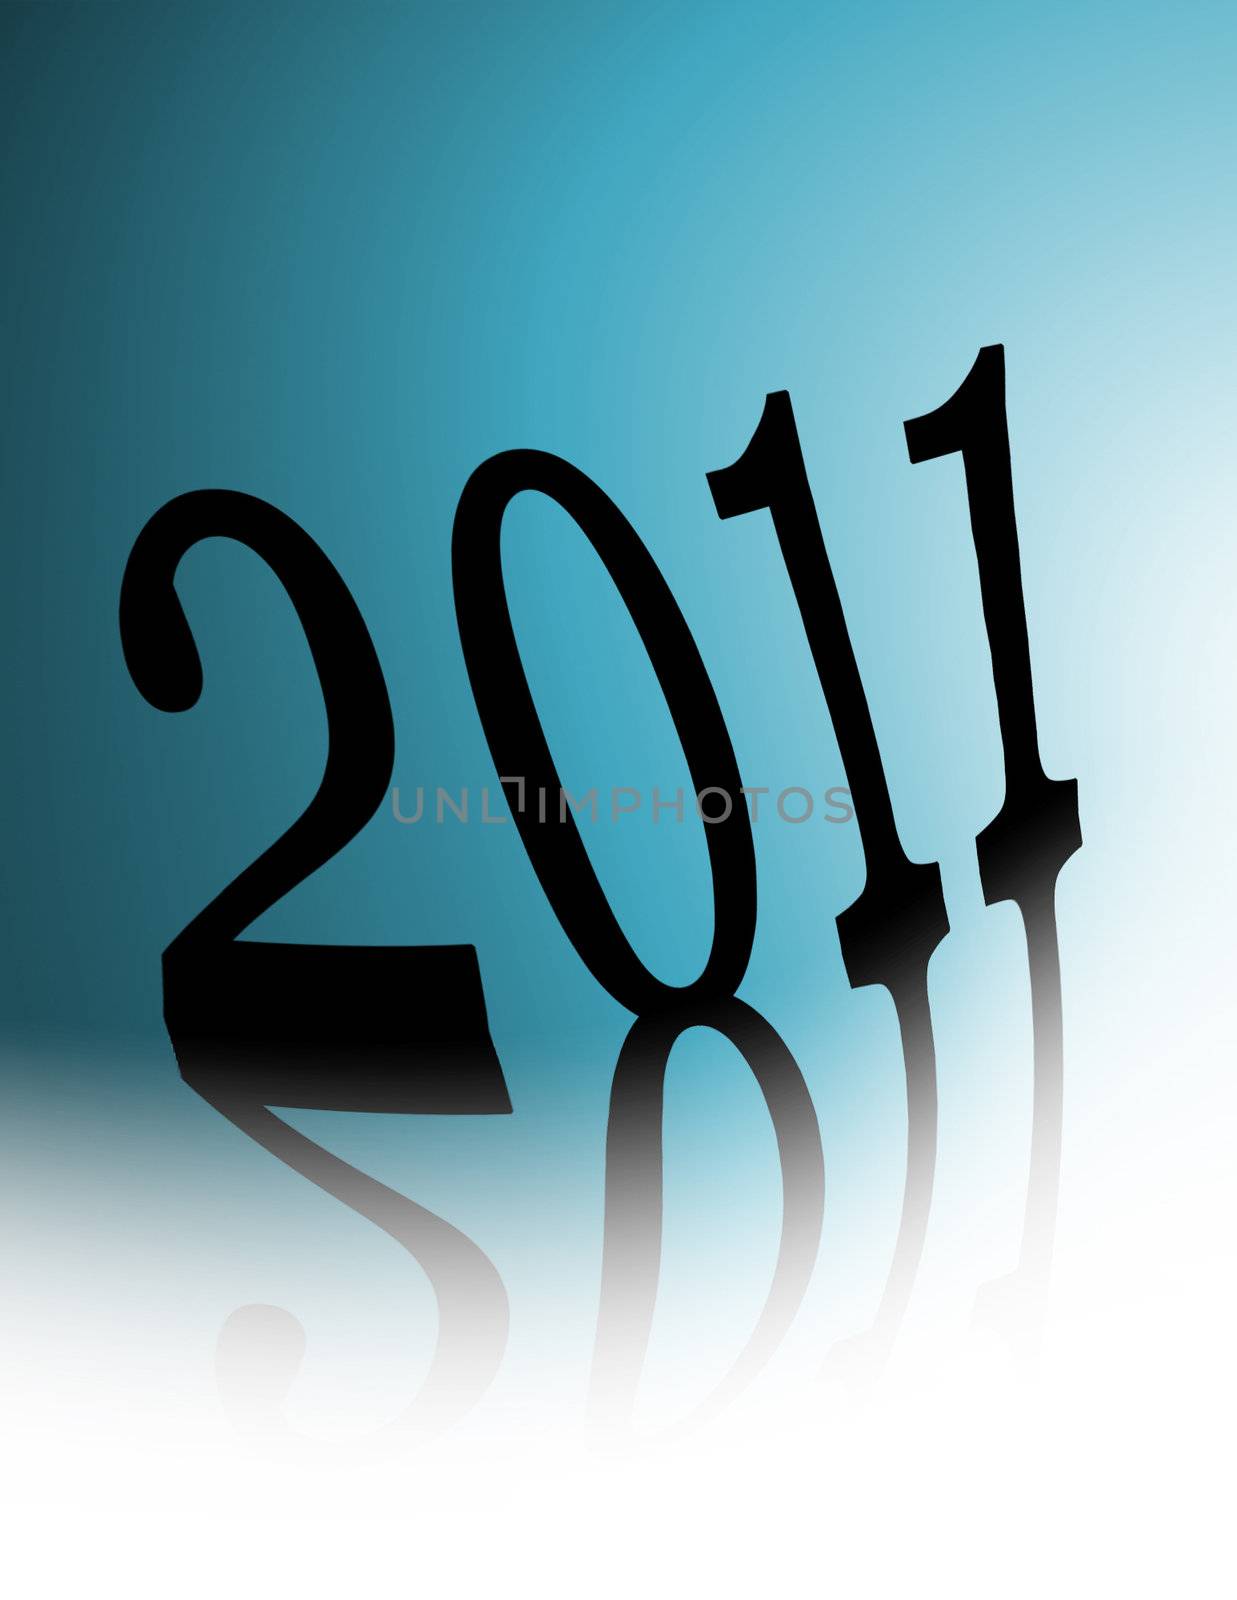 New Year background, illustration